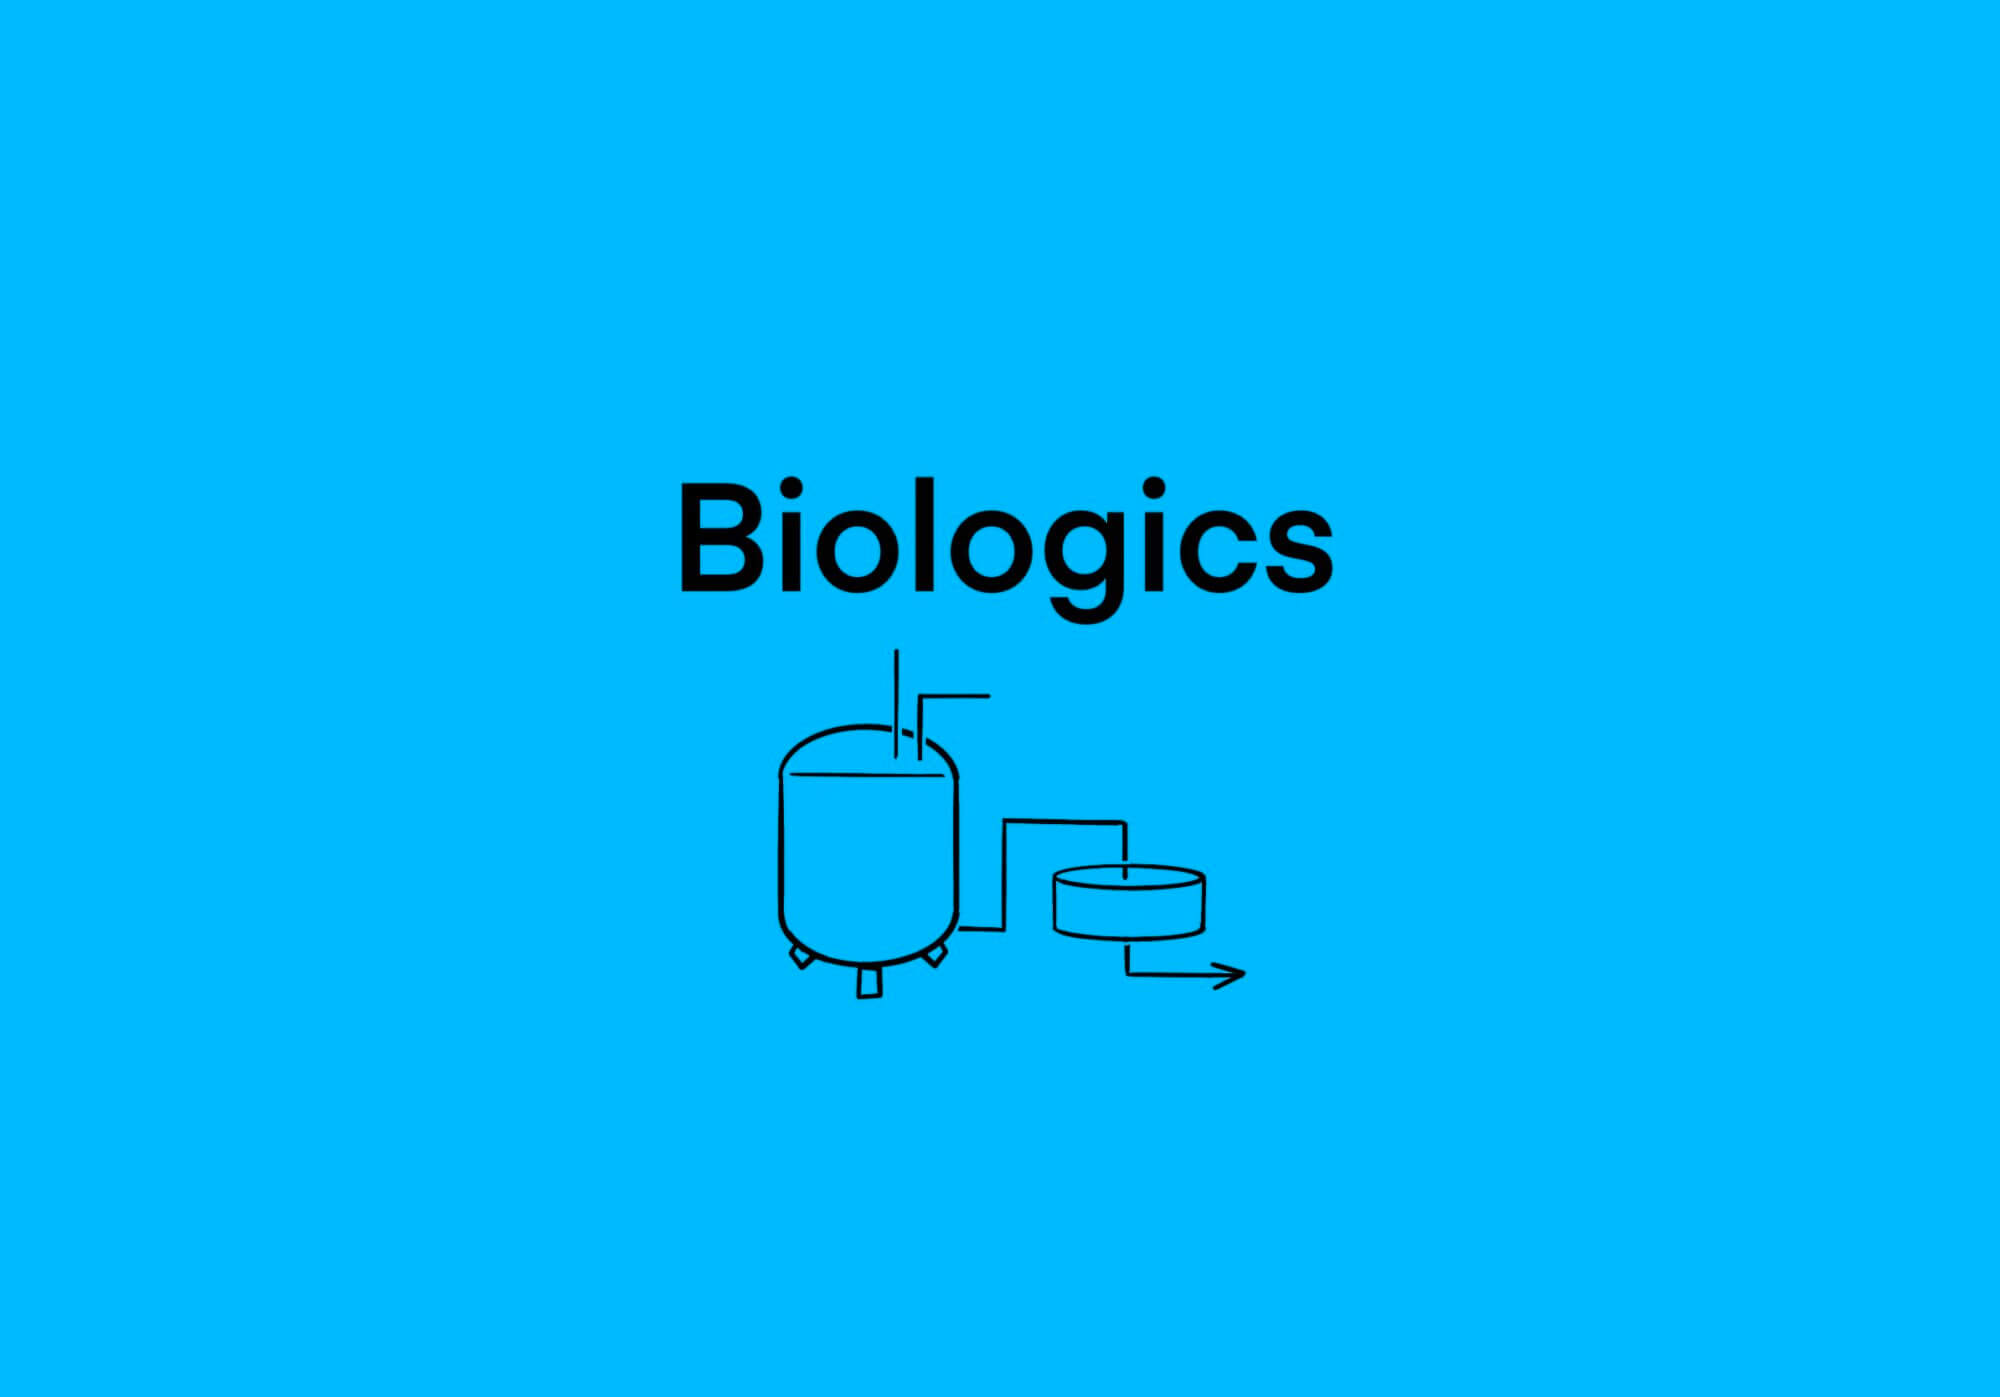 [Bio-Edu] 遺伝子組換え大腸菌からタンパク質を精製する製造フロー概略 – ID6624 [2020/01/09]